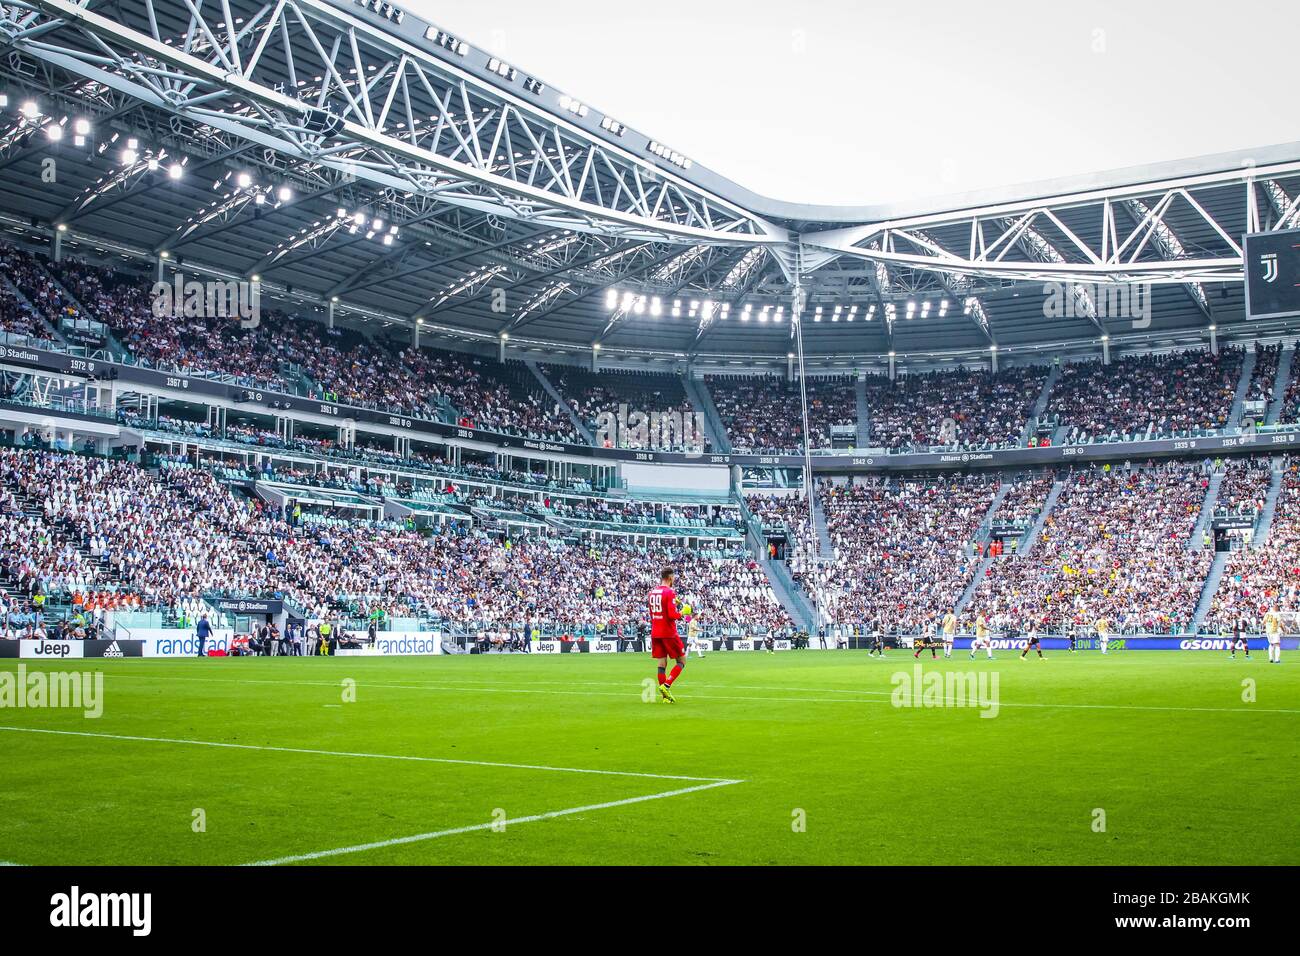 Allianz Stadium during soccer season 2019/20 symbolic images - Photo credit Fabrizio Carabelli /LM/ Stock Photo